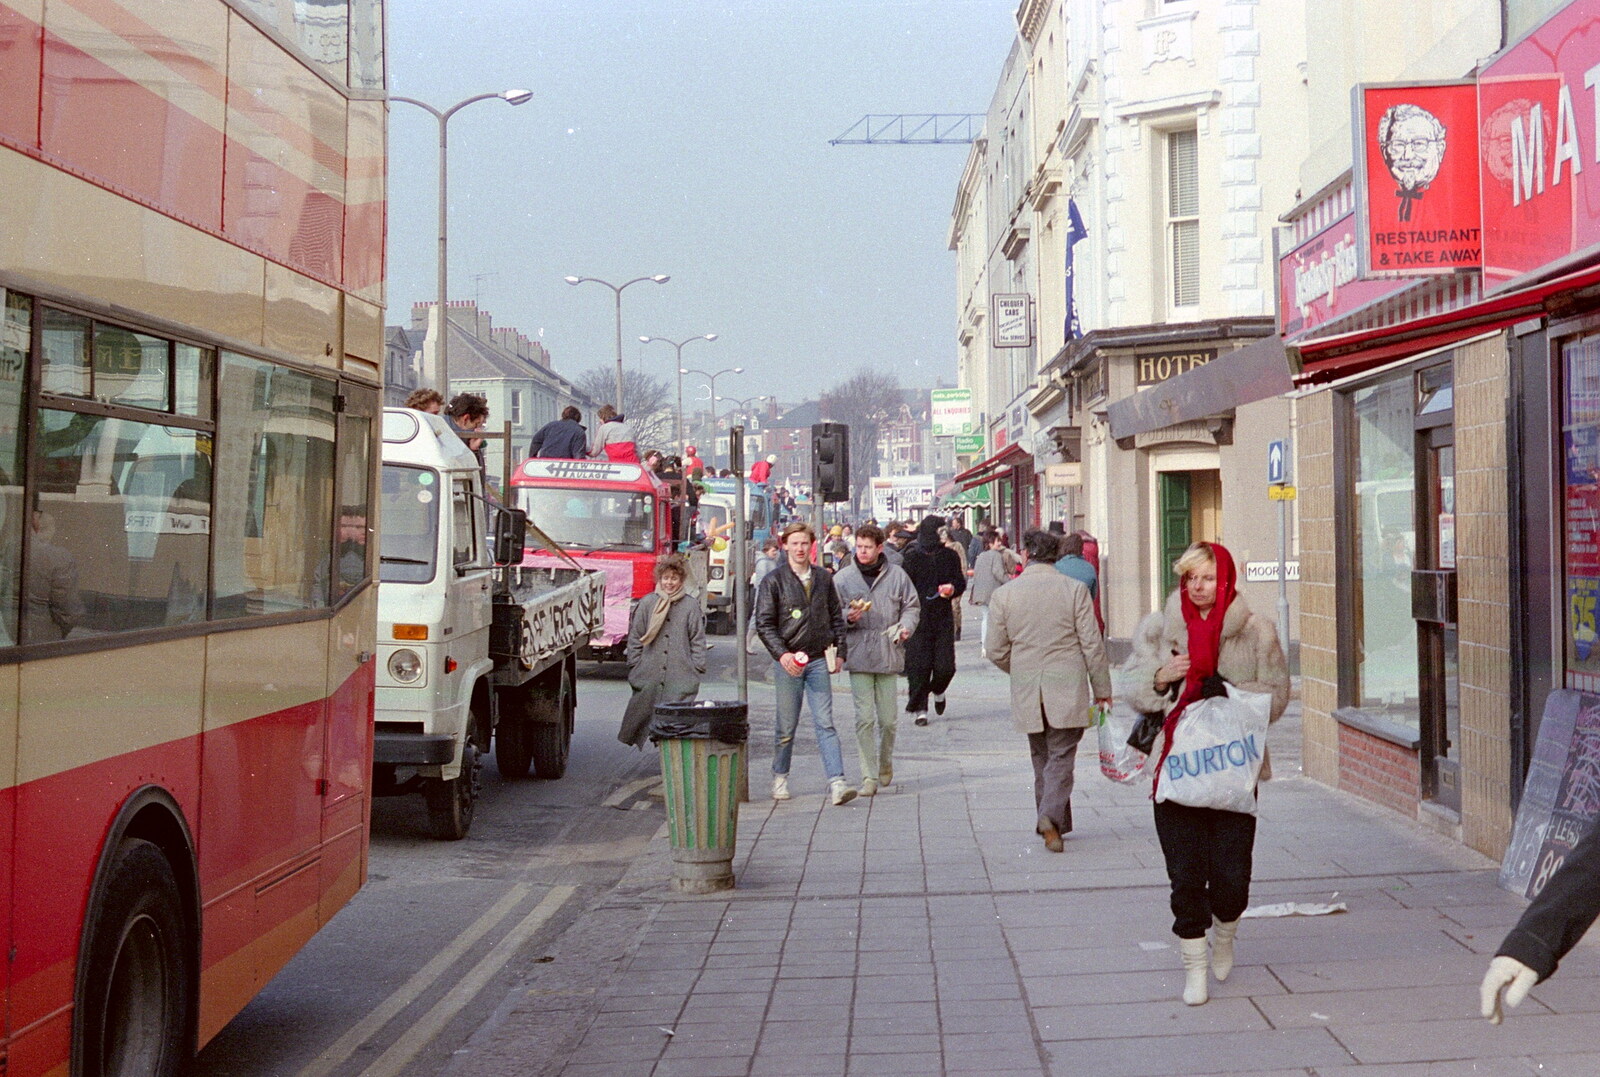 On Mutley Plain from Uni: PPSU "Jazz" RAG Street Parade, Plymouth, Devon - 17th February 1986